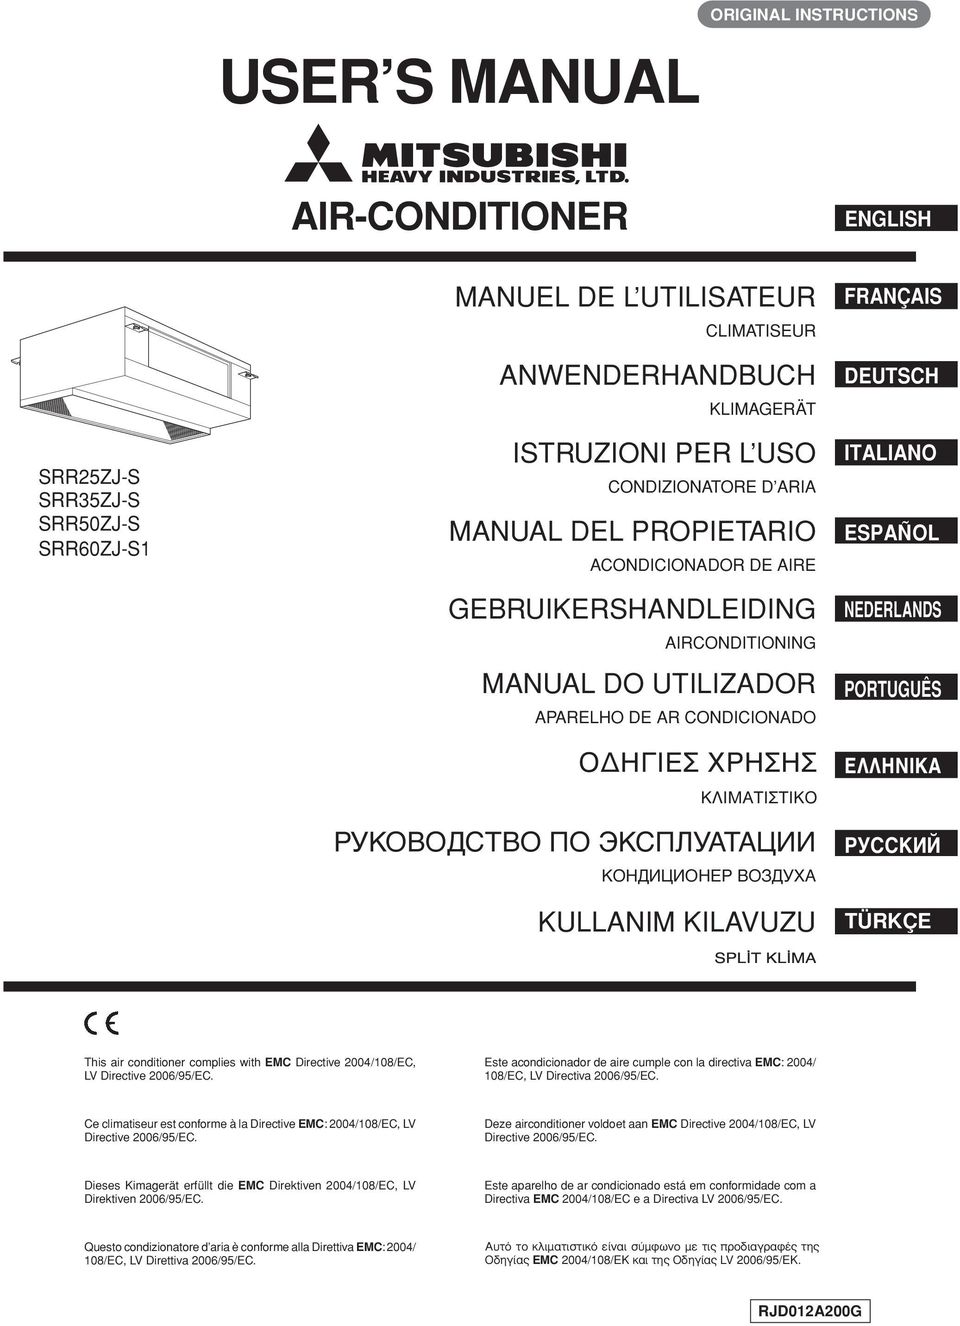 ЭКСПЛУАТАЦИИ КОНДИЦИОНЕР ВОЗДУХА KULLANIM KILAVUZU FRANÇAIS DEUTSCH ITALIANO ESPAÑOL NEDERLANDS PORTUGUÊS EΛΛHNIKA РУССКИЙ TÜRKÇE This air conditioner complies with EMC Directive 2004/108/EC, LV